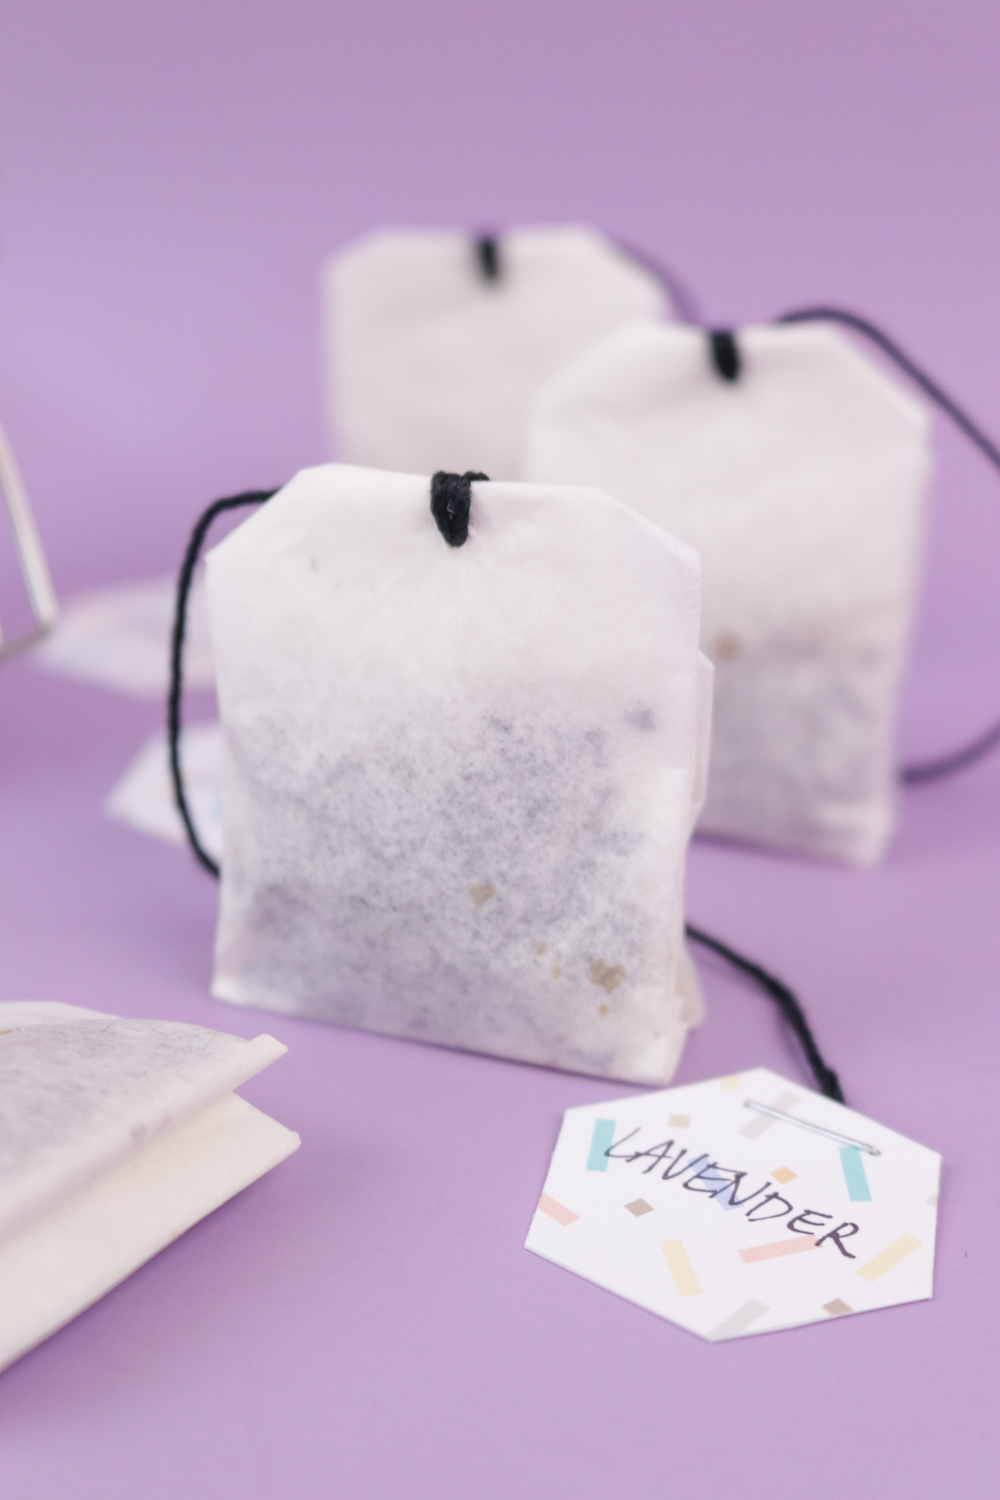 DIY Coffee Filter Tea Bags + Printable Tags | Club Crafted